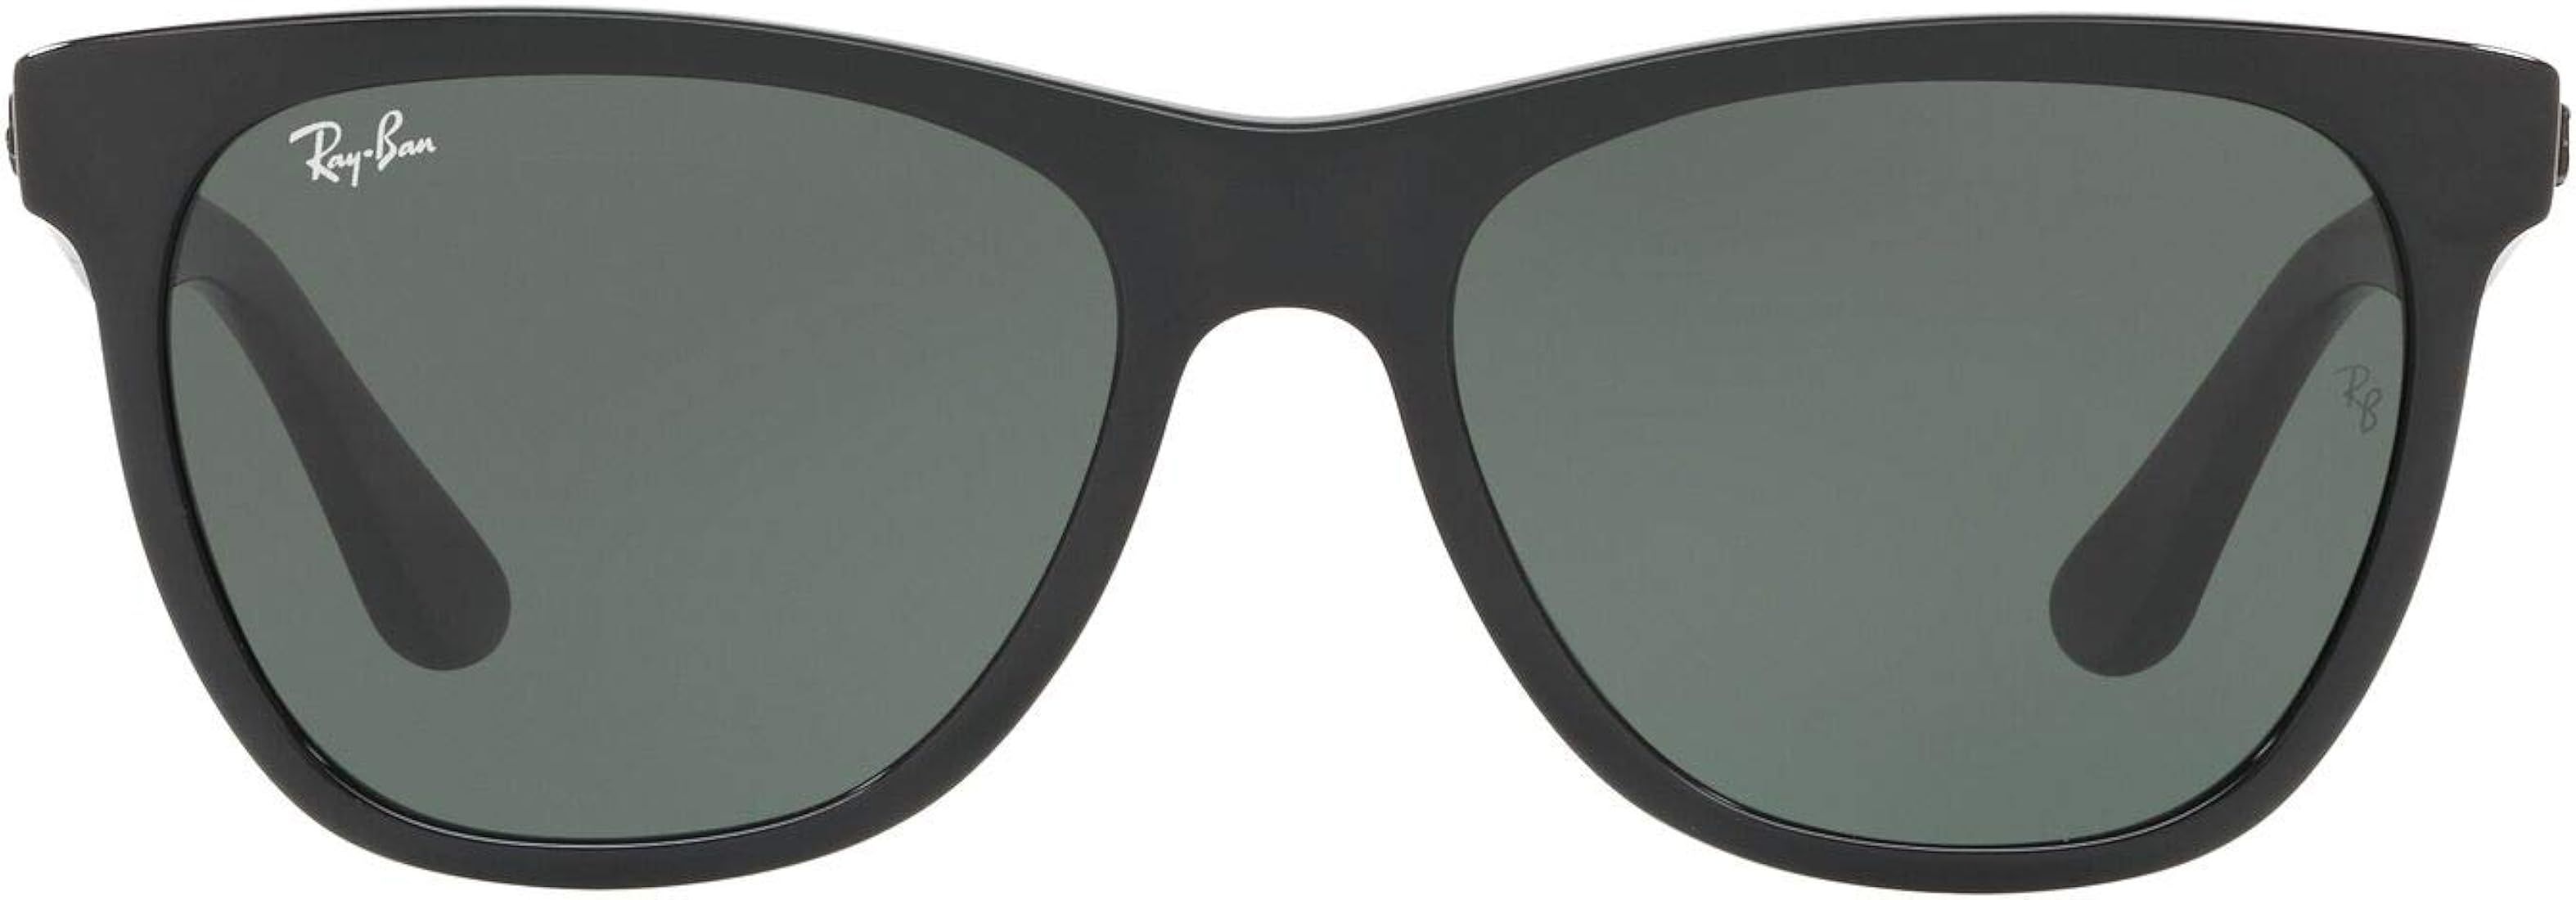 Ray-Ban RB4184 Square Sunglasses, Black/Green, 54 mm | Amazon (US)